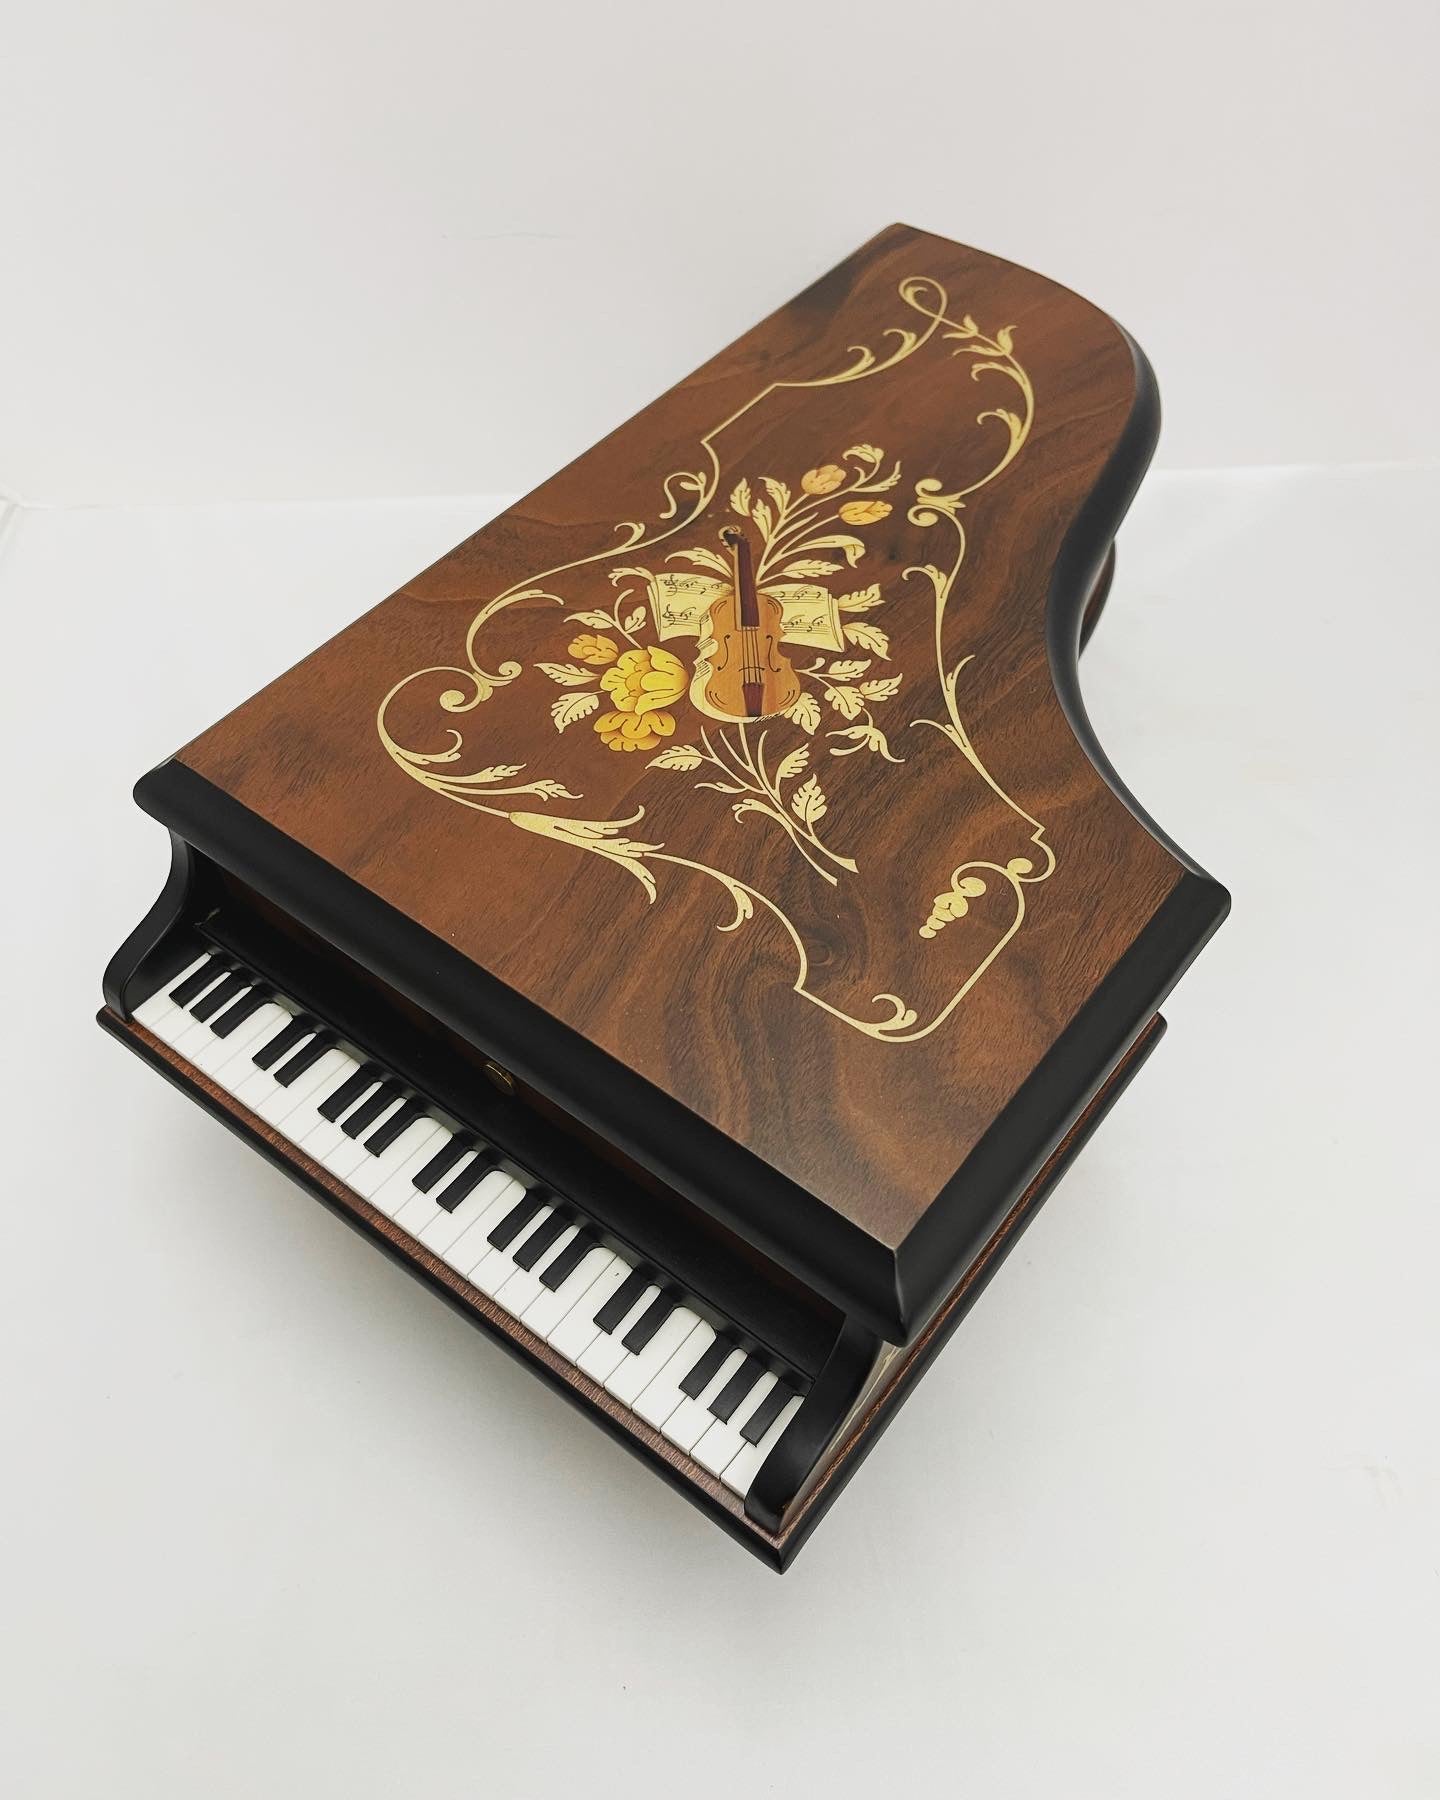 Inlaid Sorrento Italy Piano Shaped Music Box  -Tune:  "Its a Wonderful World"